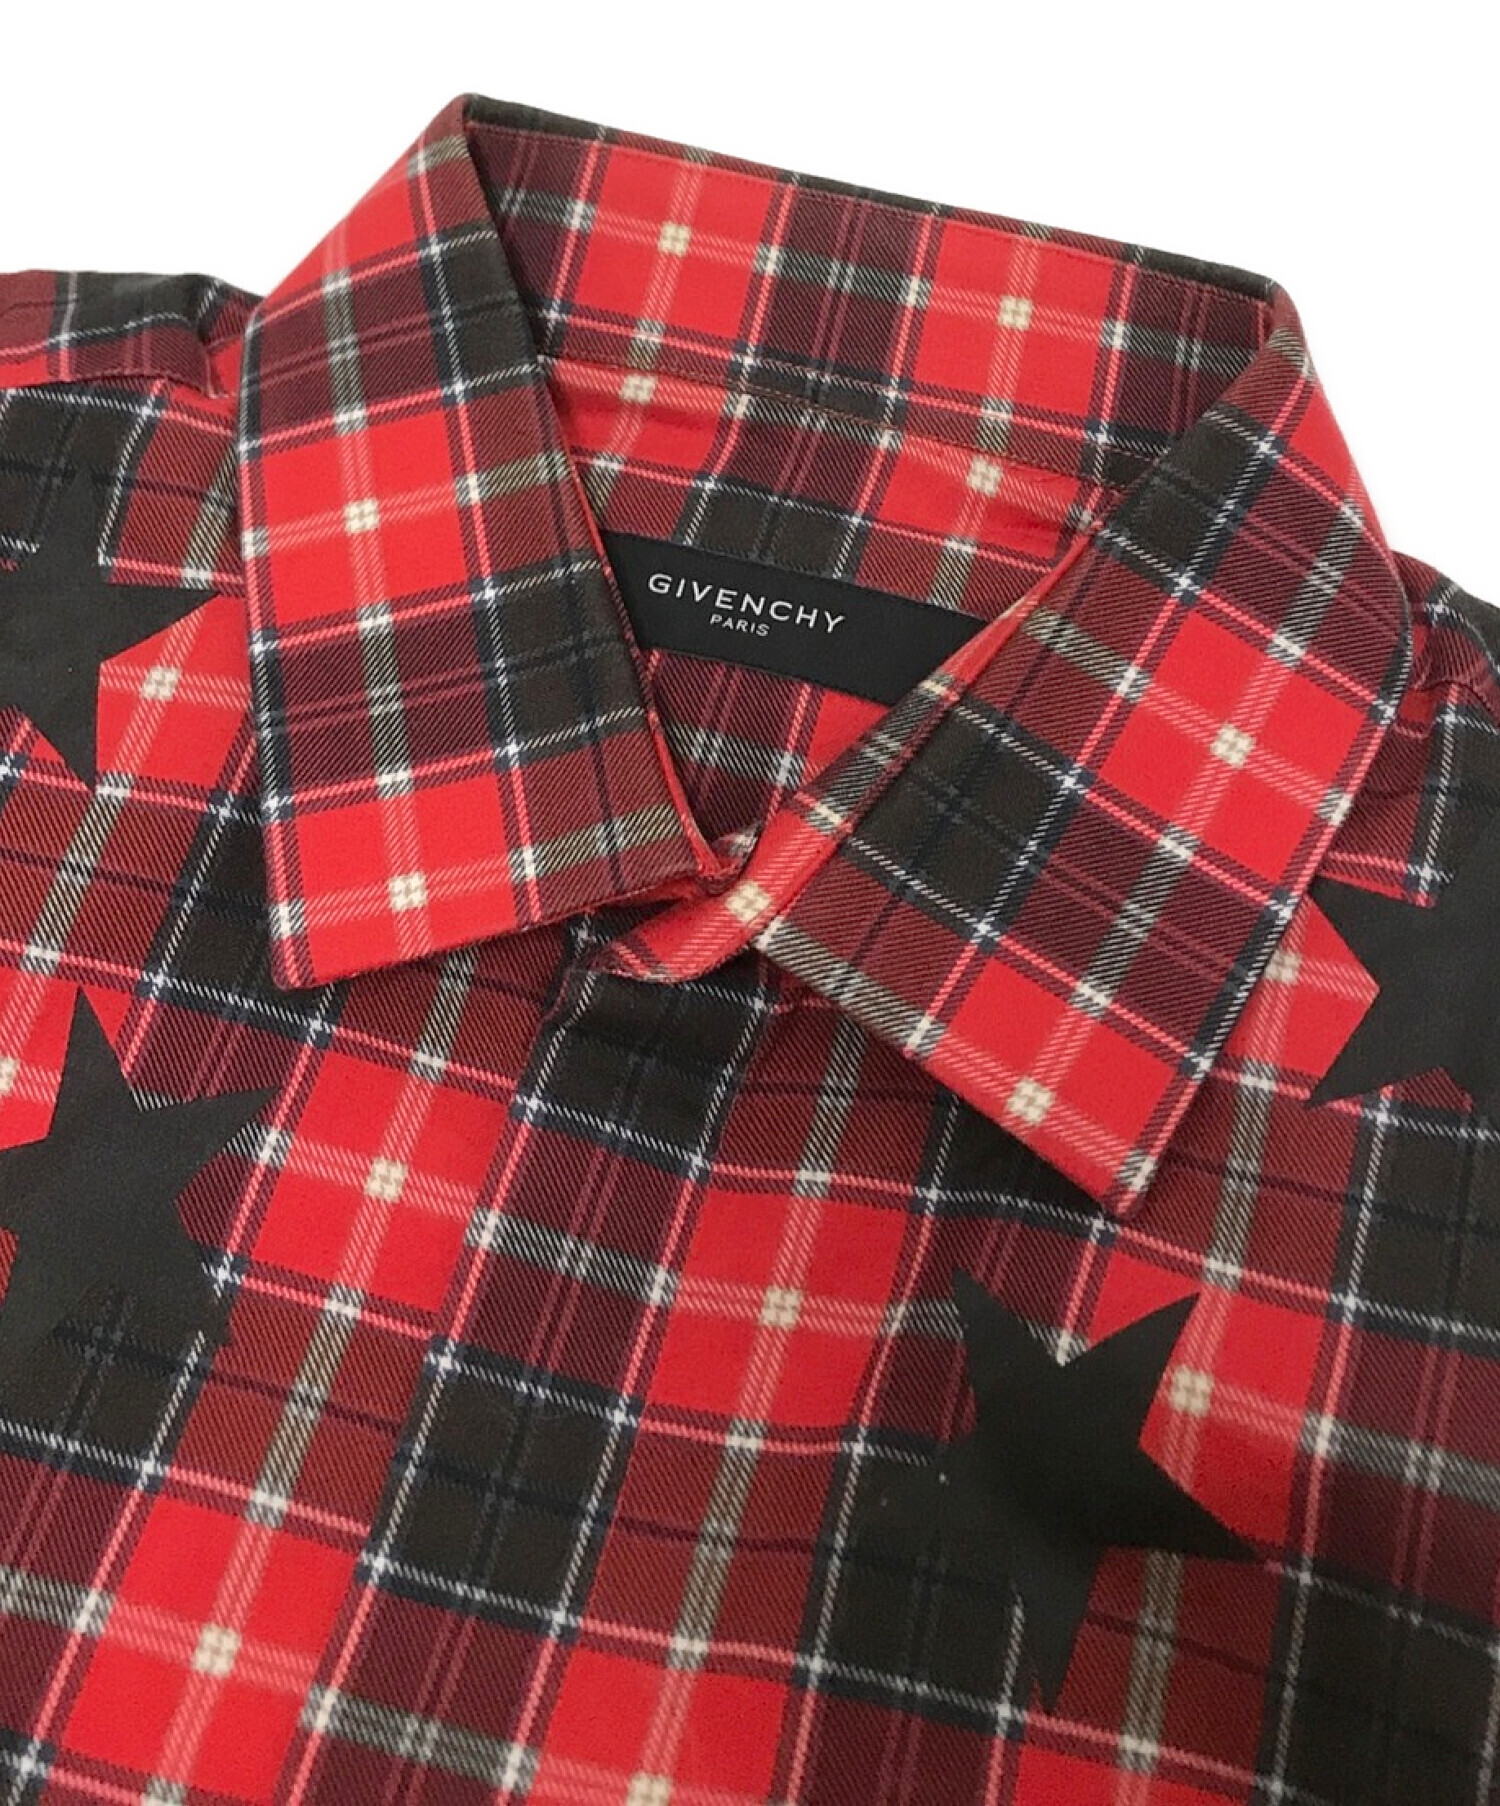 GIVENCHY (ジバンシィ) スタープリントチェックシャツ レッド×ブラック サイズ:40